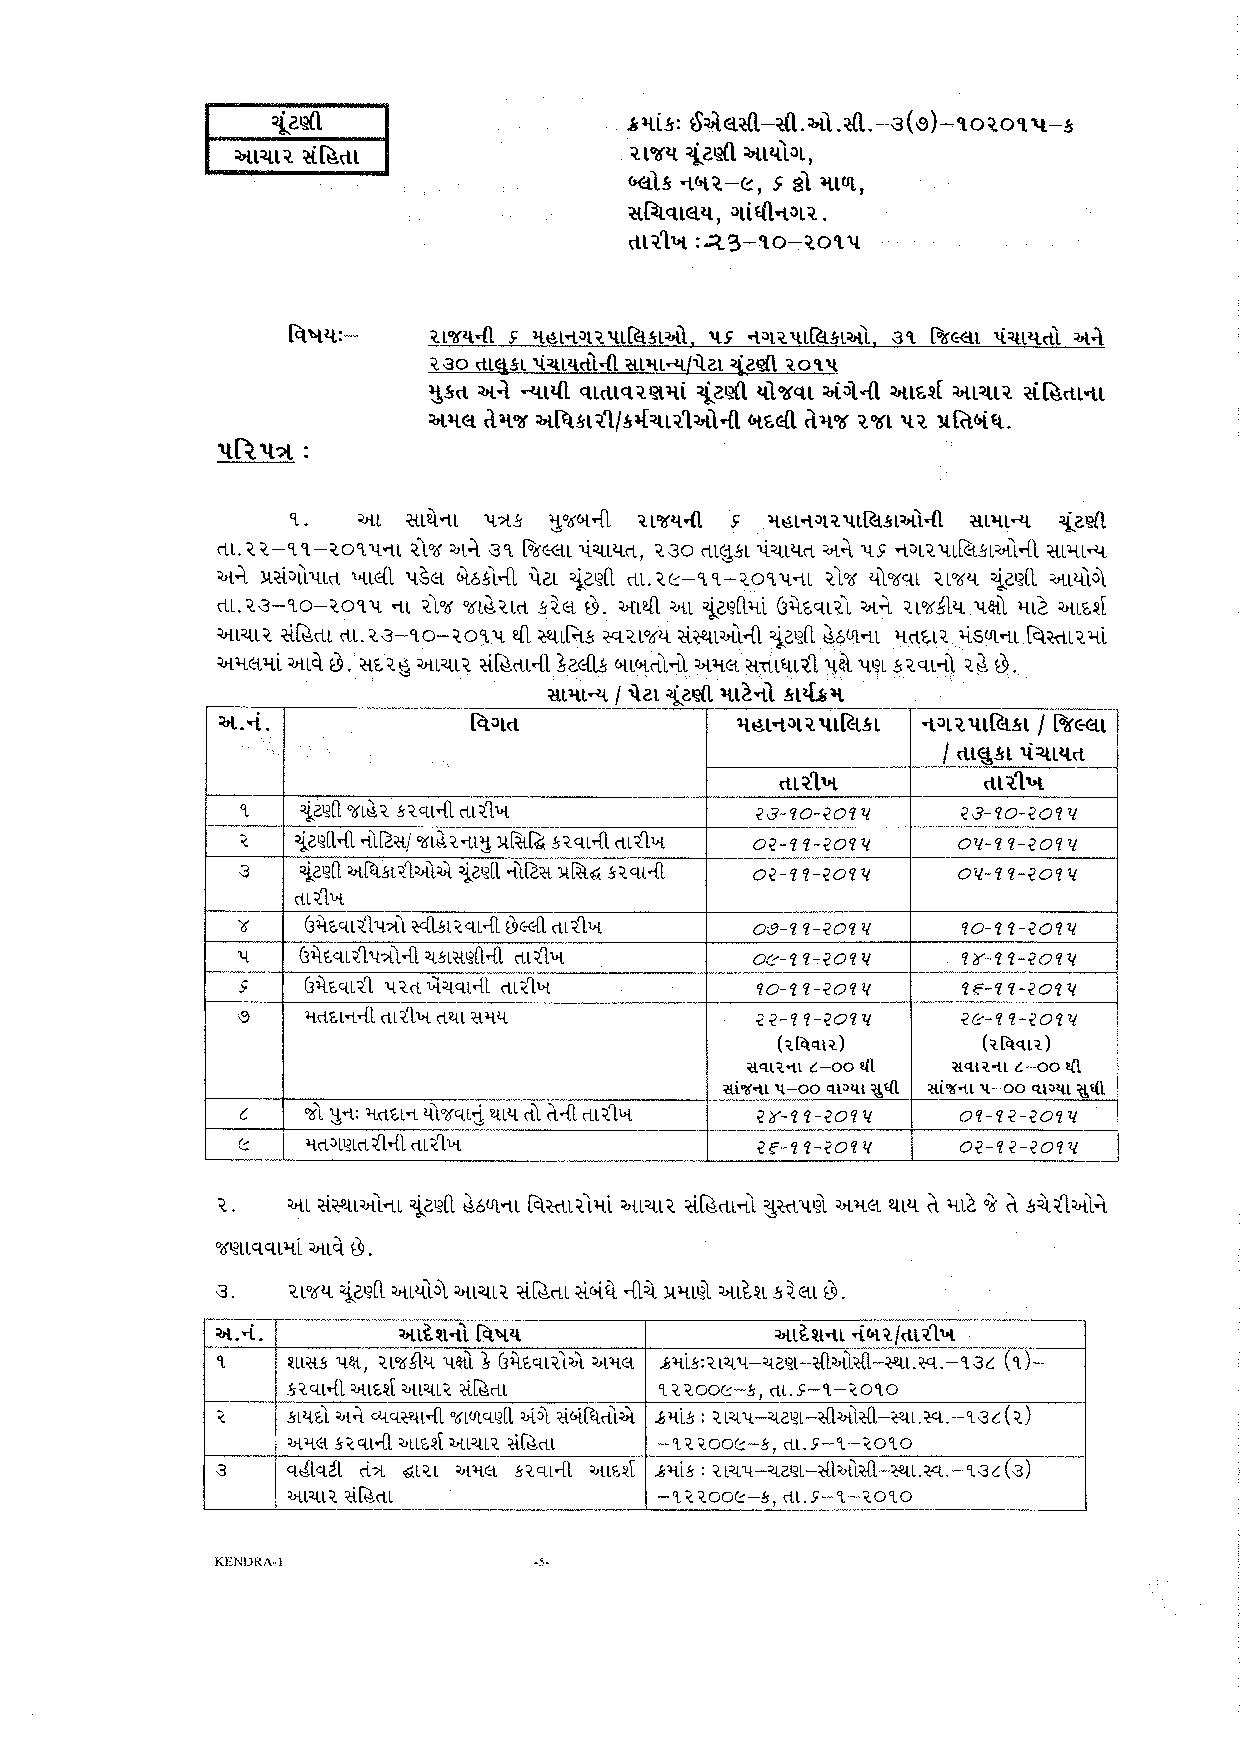 Gujarat local body elections dates